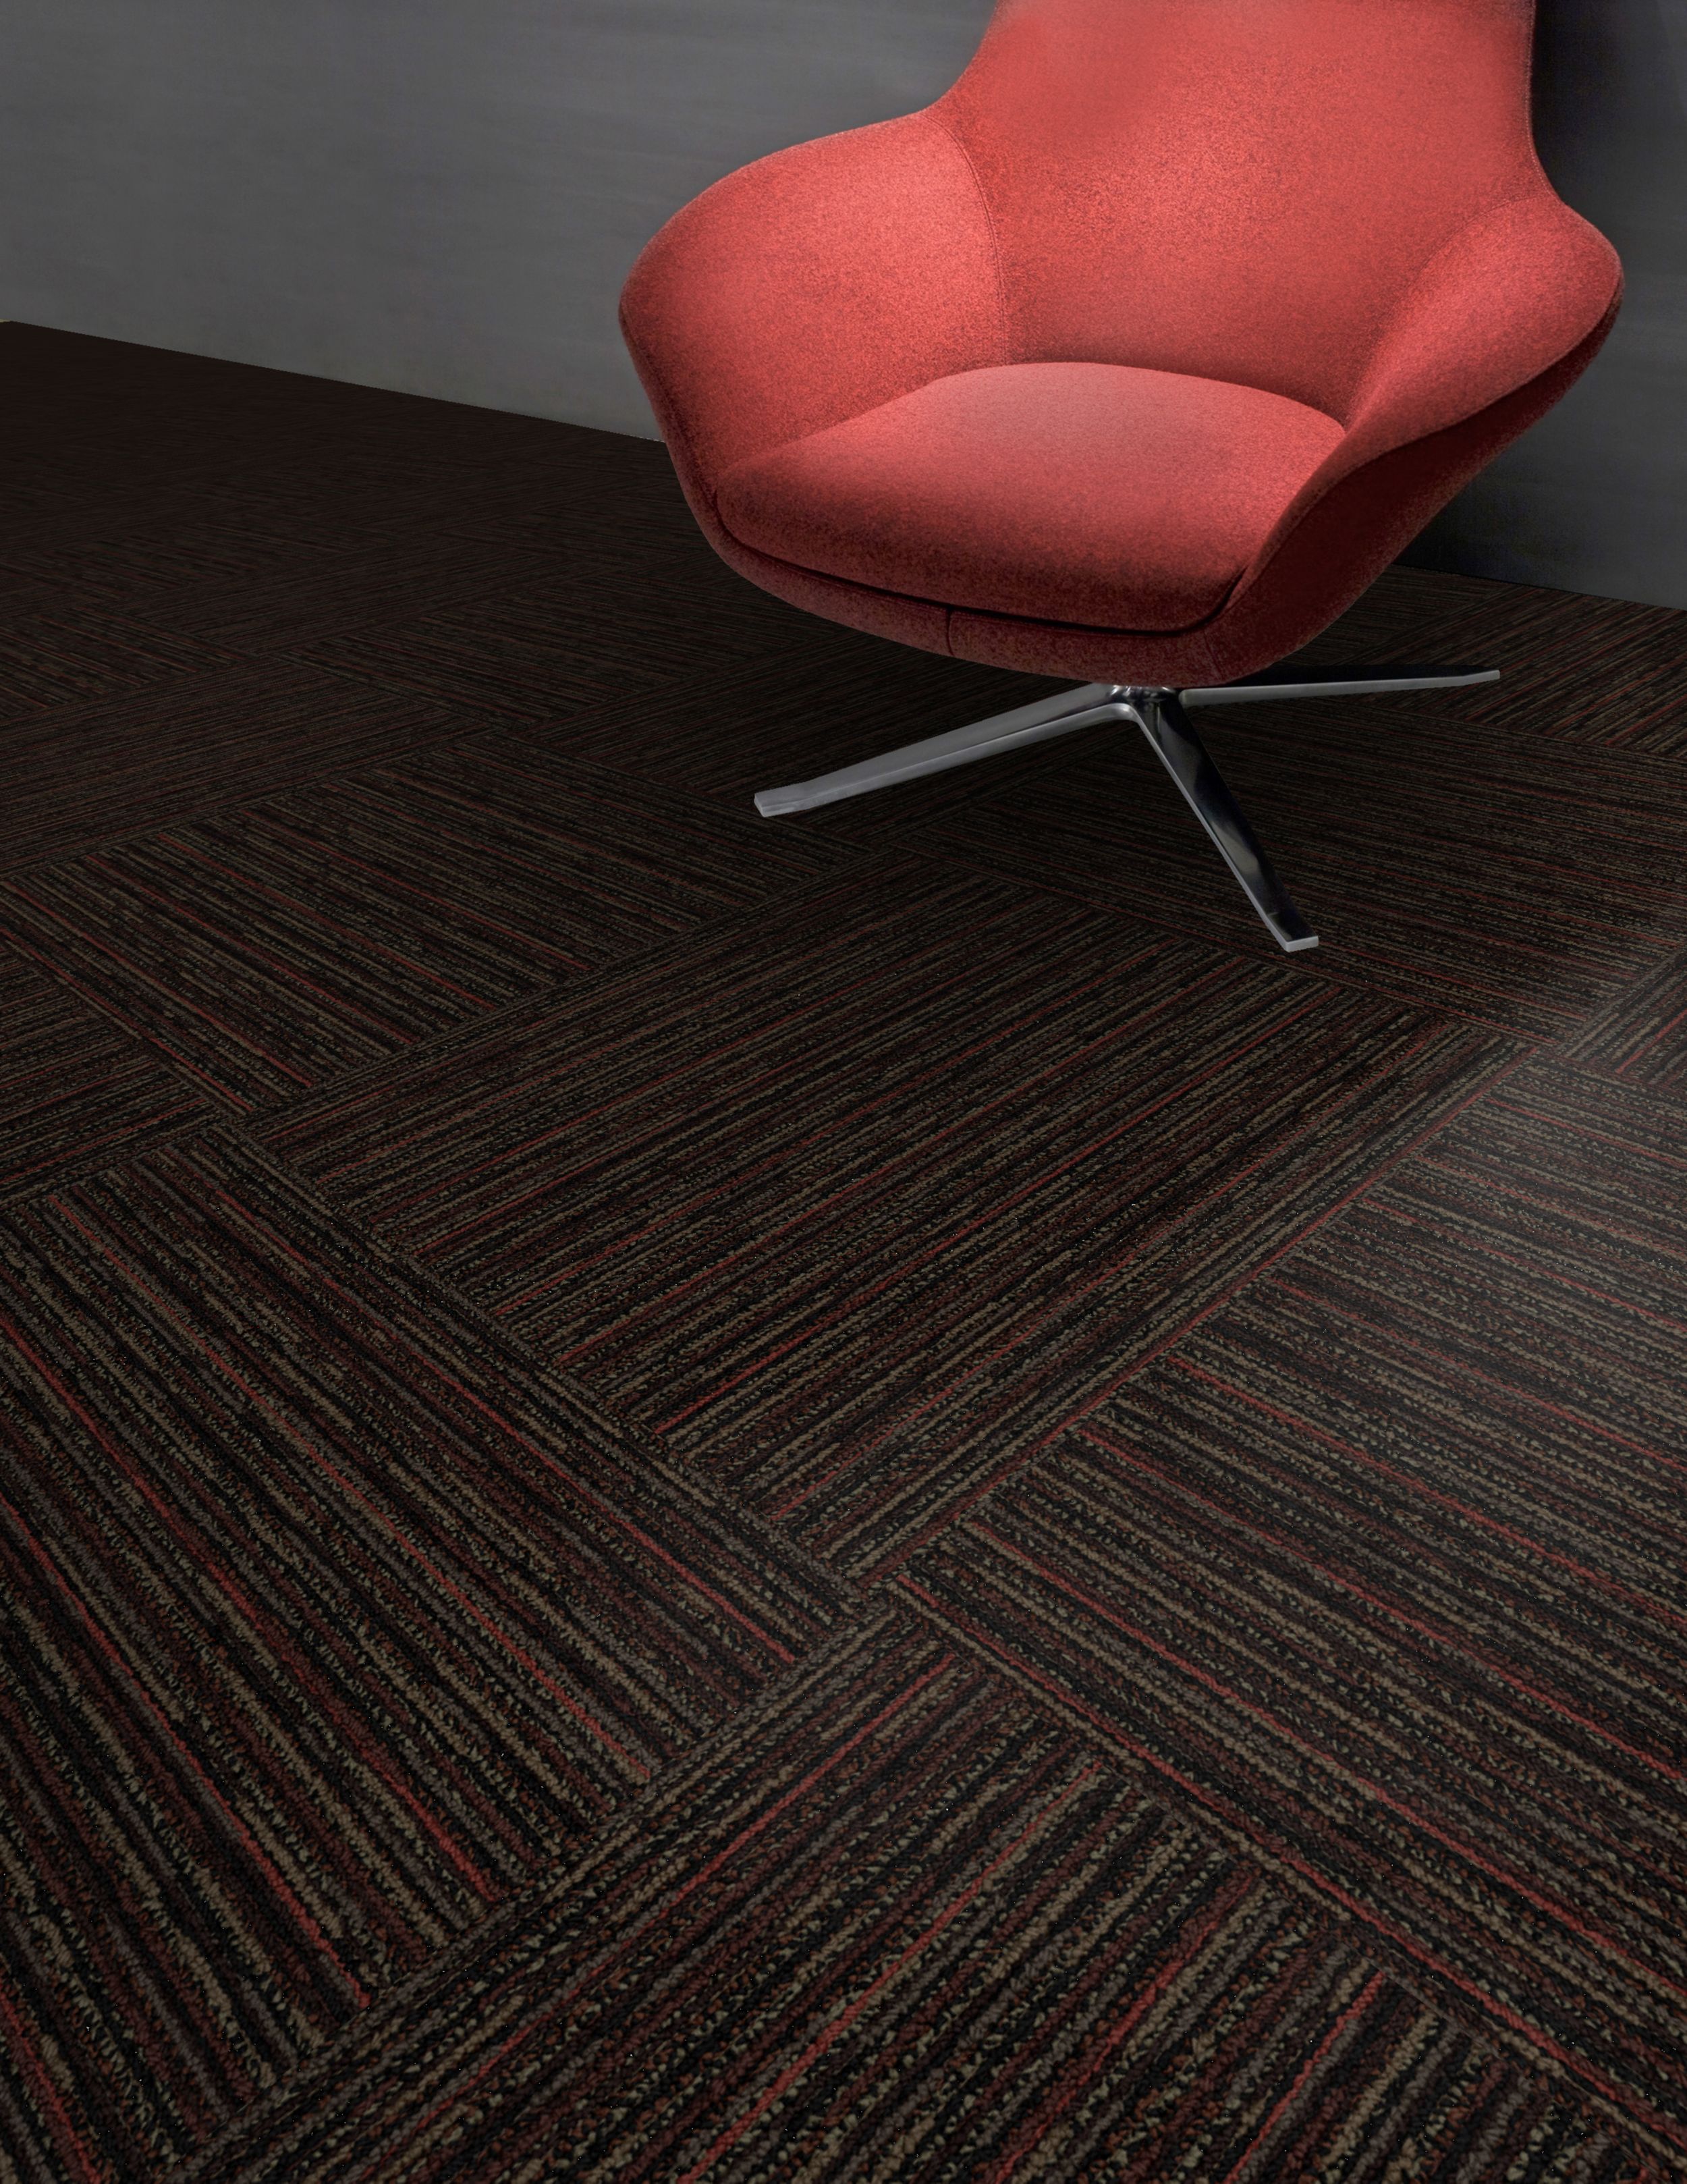 Interface Farmland Loop carpet tile wiith coral colored chair imagen número 8